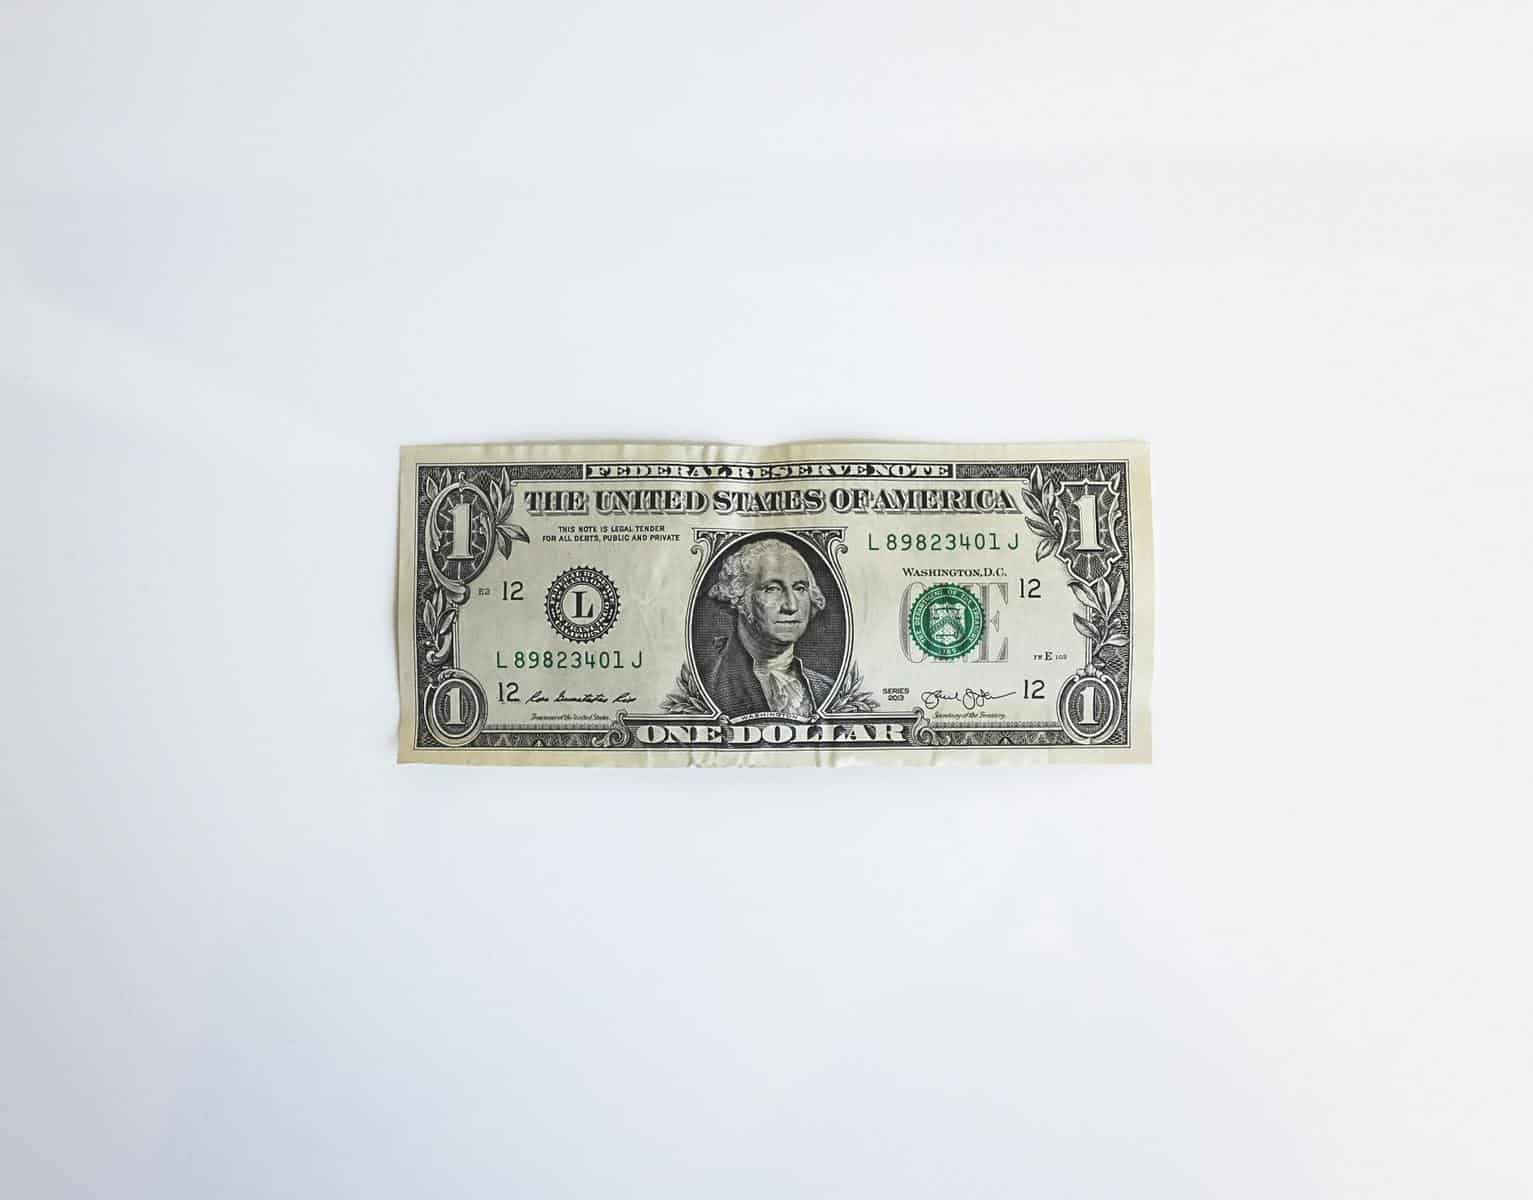 1 US dollar bill